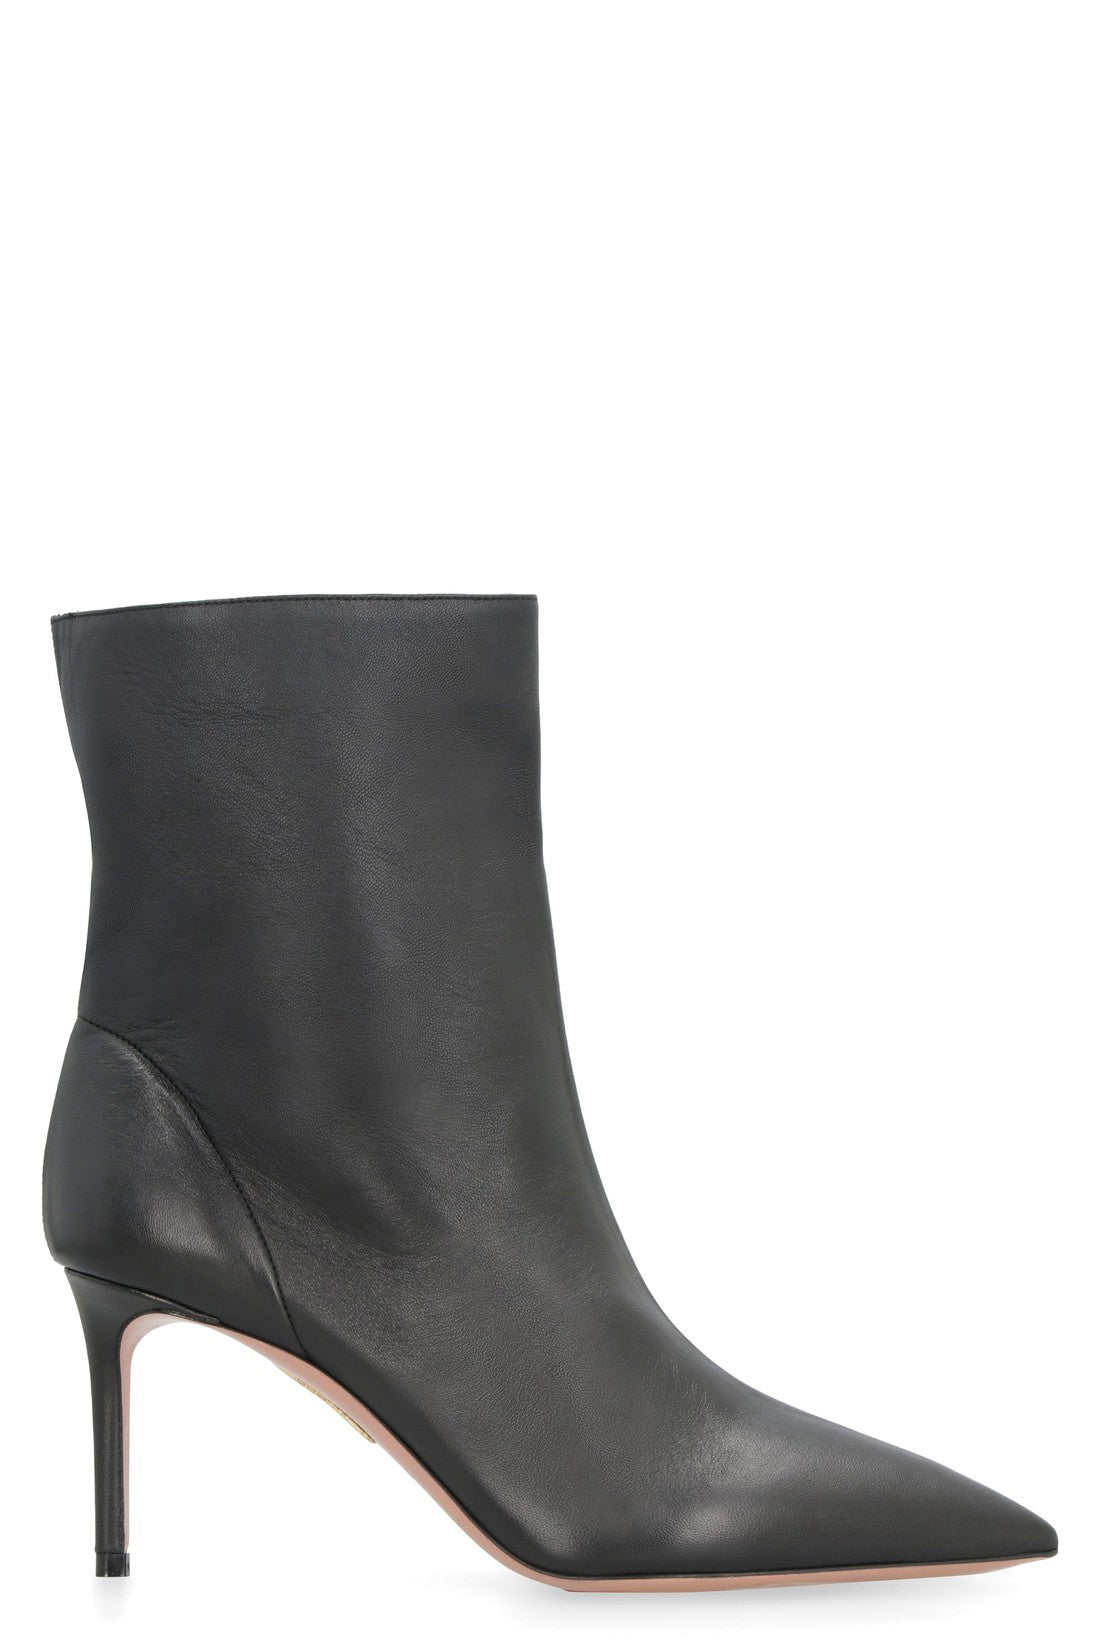 Aquazzura-OUTLET-SALE-Matignon leather pointy-toe ankle boots-ARCHIVIST